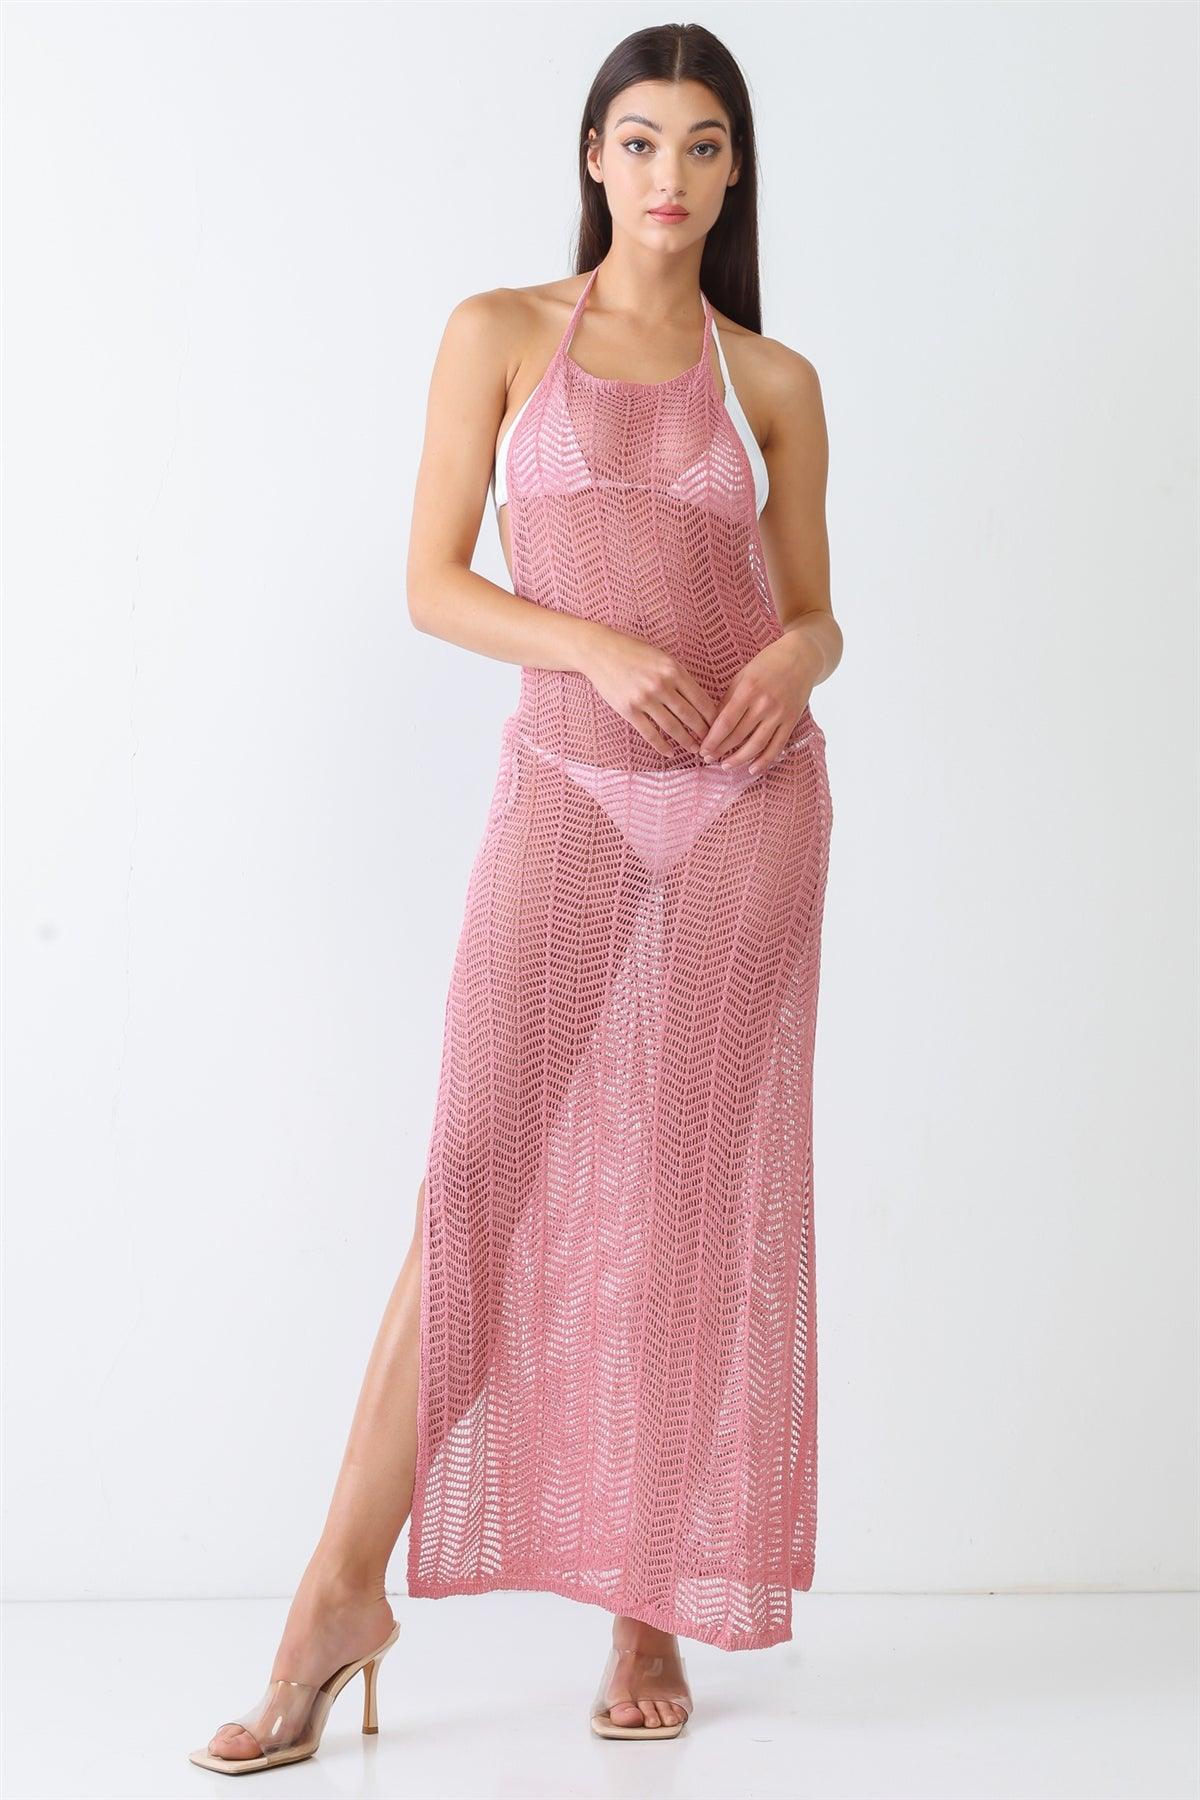 Mauve Knit Crochet Lace Sheer Sleeveless Halter Neck Open Back Maxi Dress /3-2-1